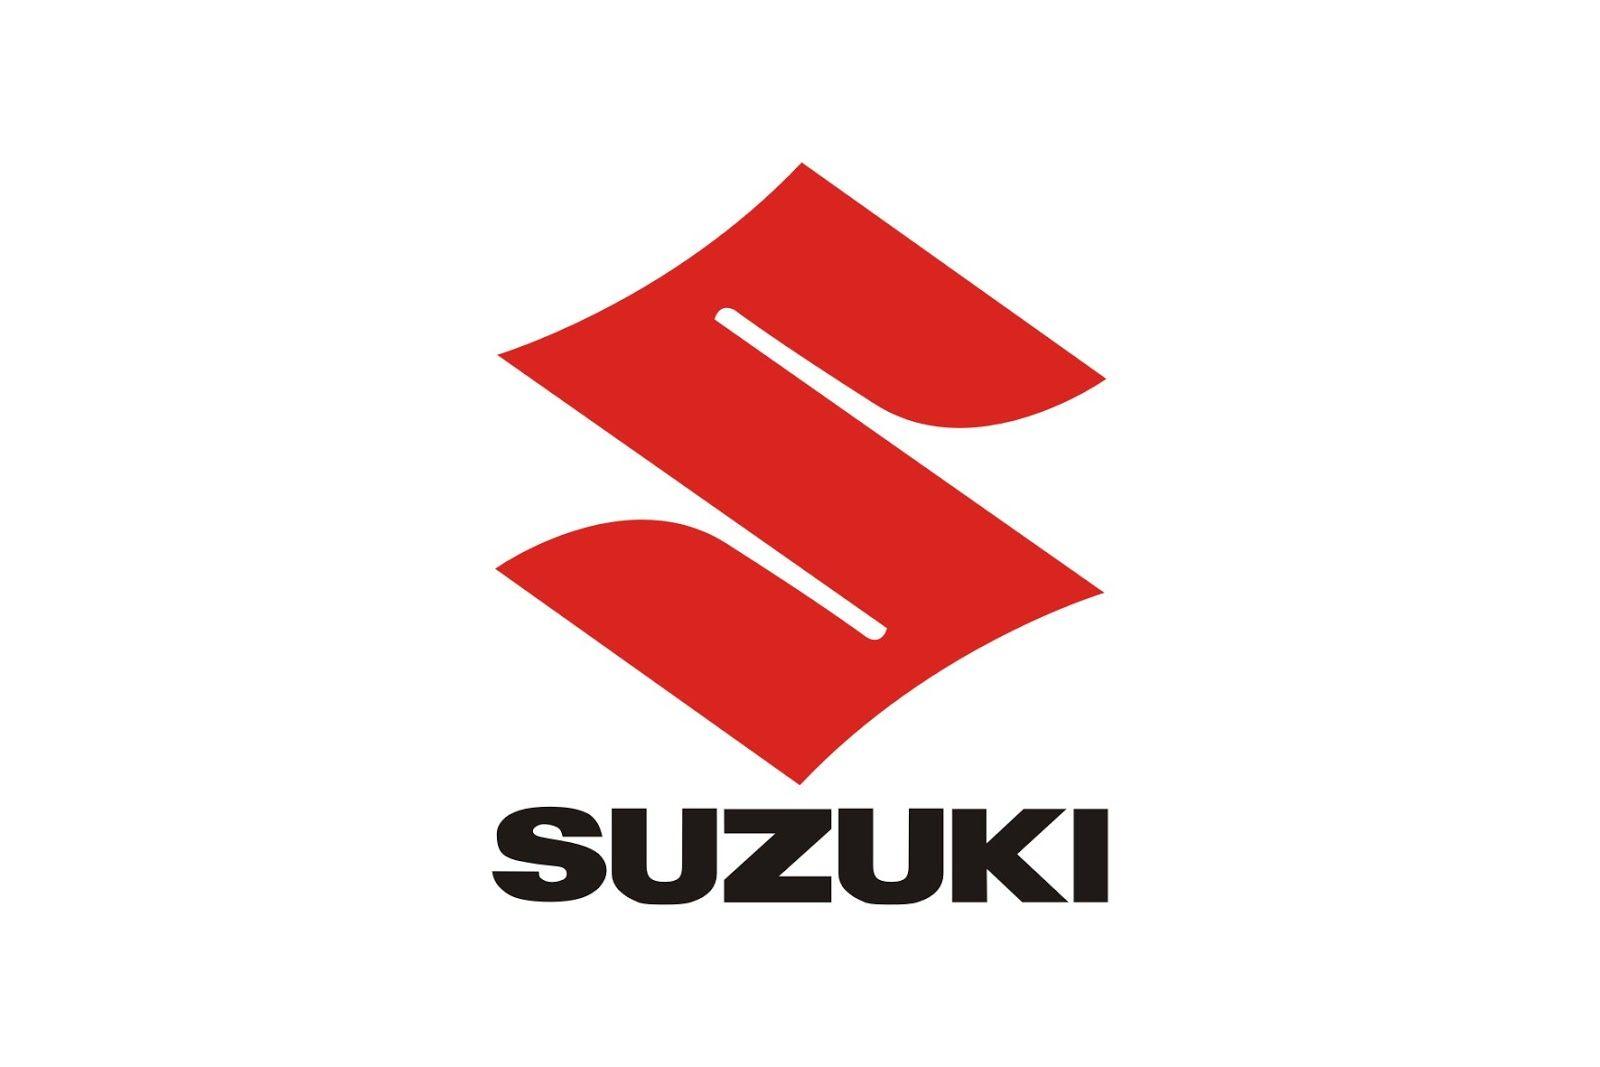 Maruti Logo - Suzuki Logo, Suzuki Car Symbol Meaning and History | Car Brand Names.com